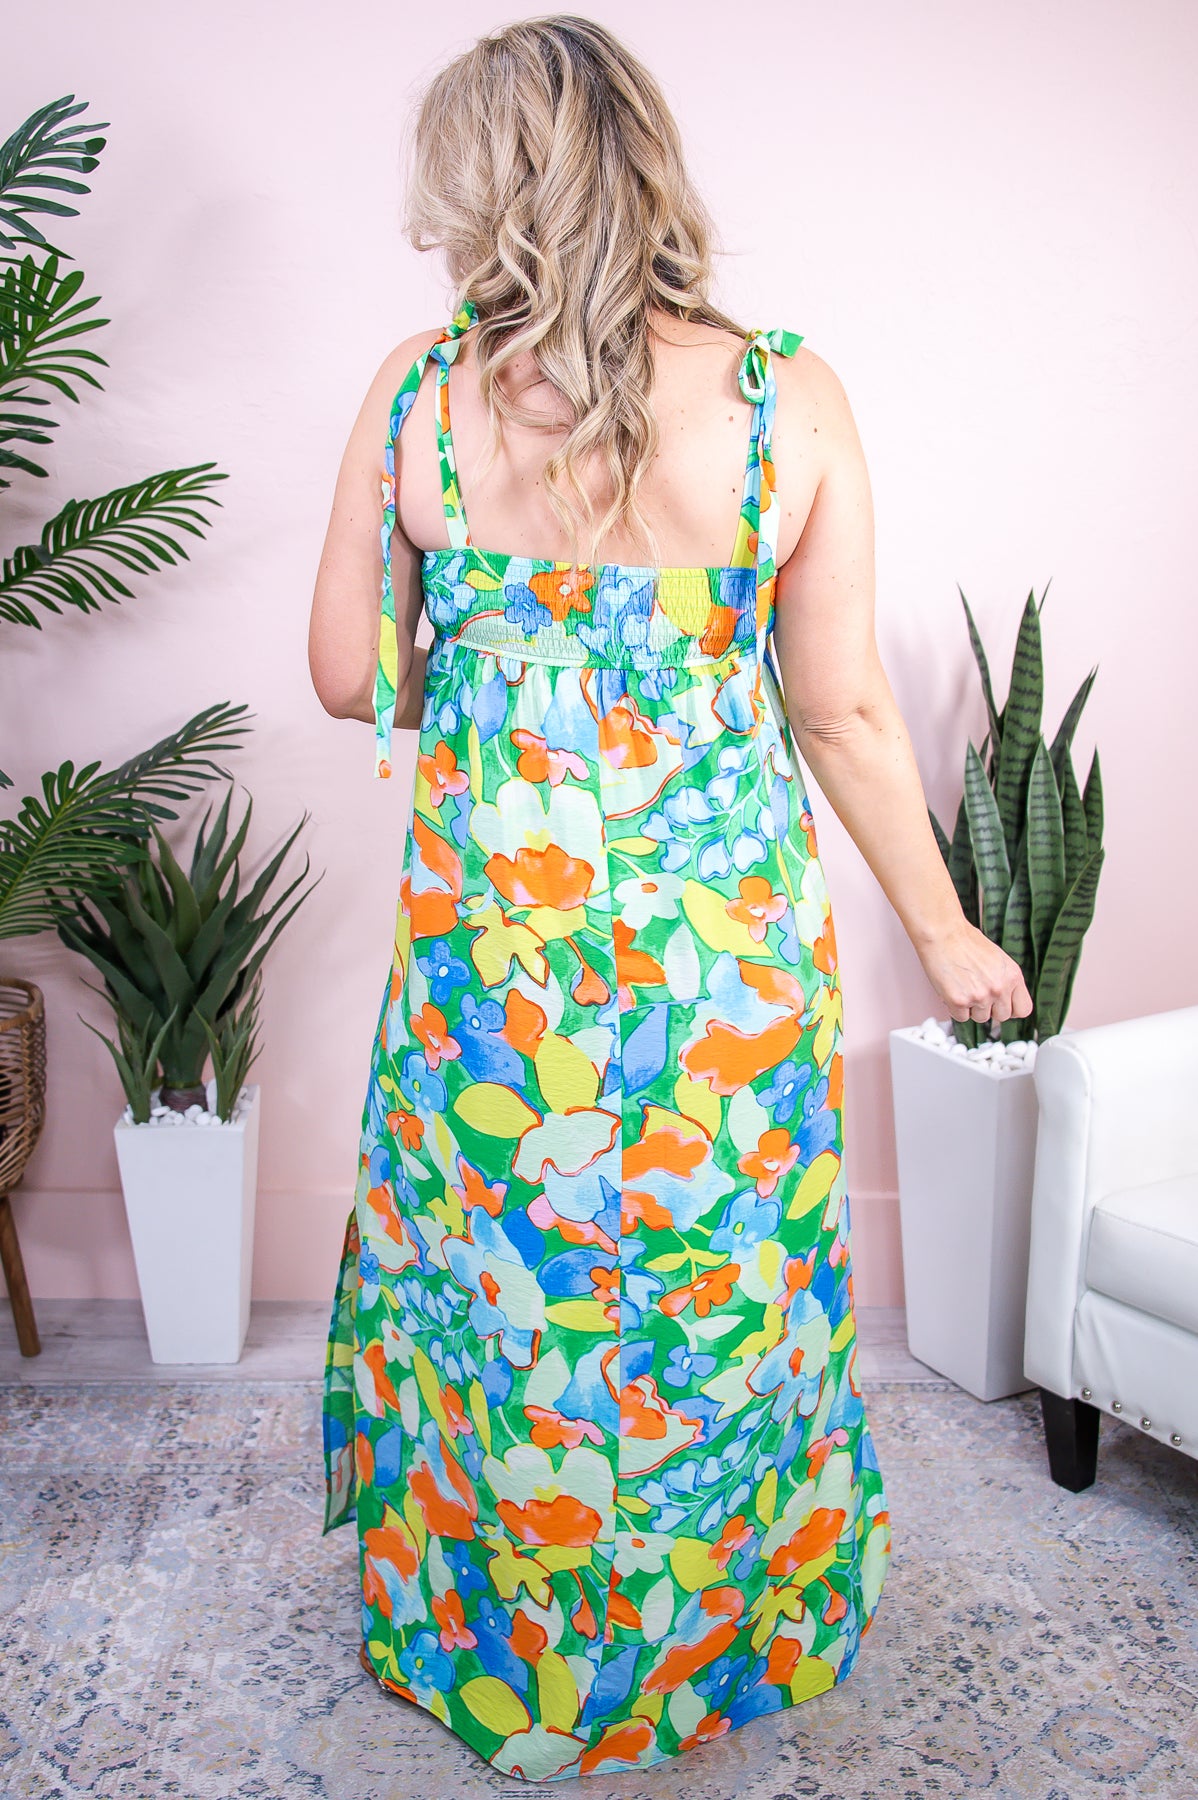 Taking A Stroll Through Gardens Green/Multi Color Floral Maxi Dress - D5226GN